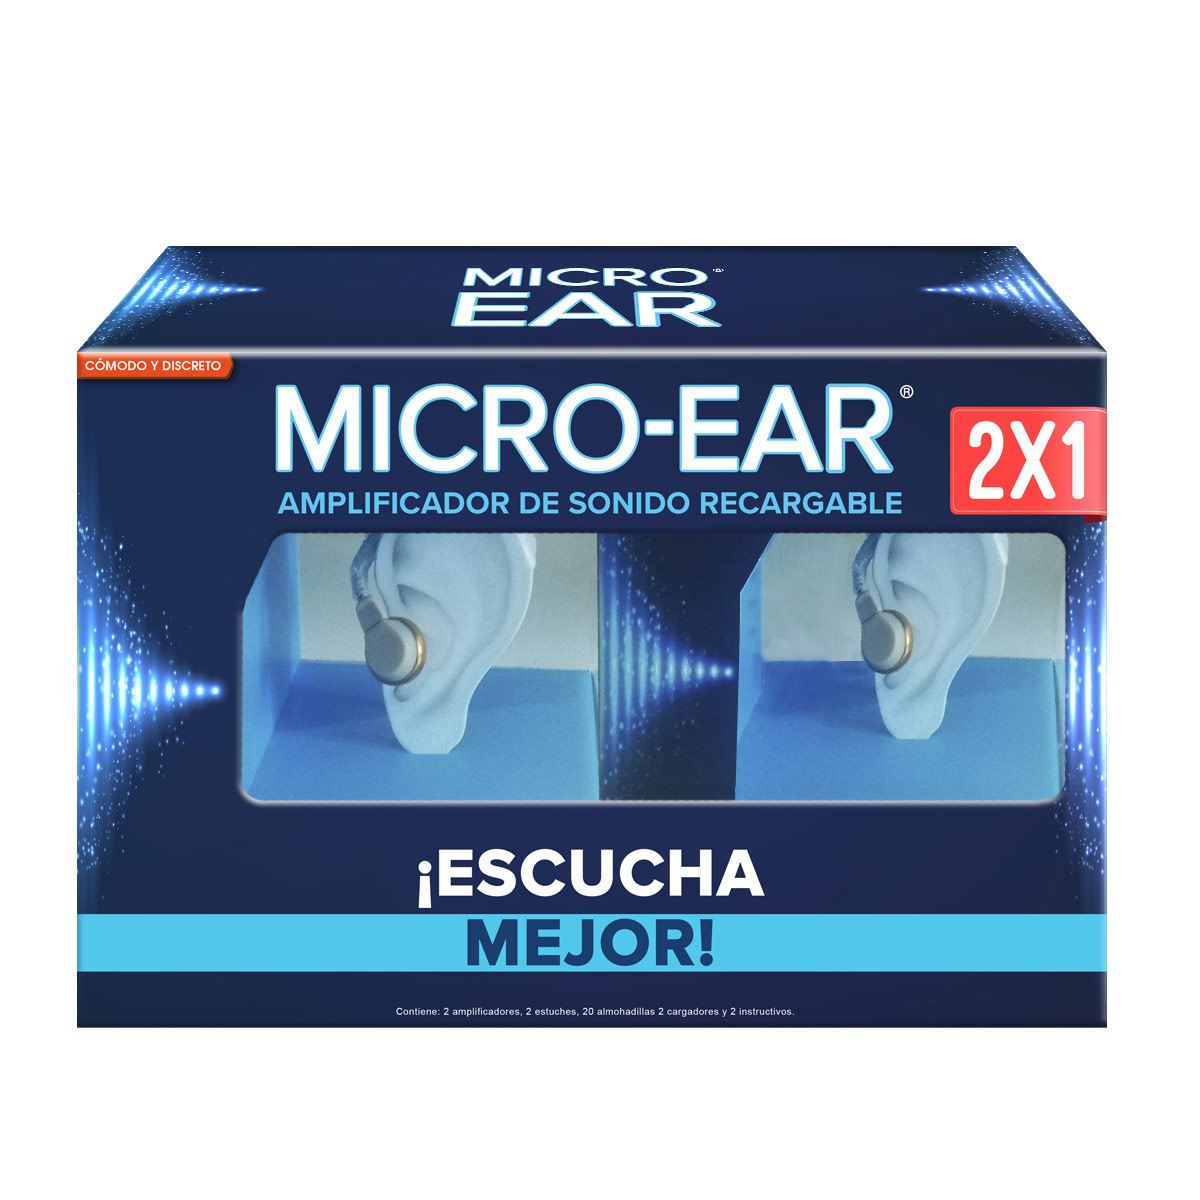 Micro Ear - Amplifica sonido